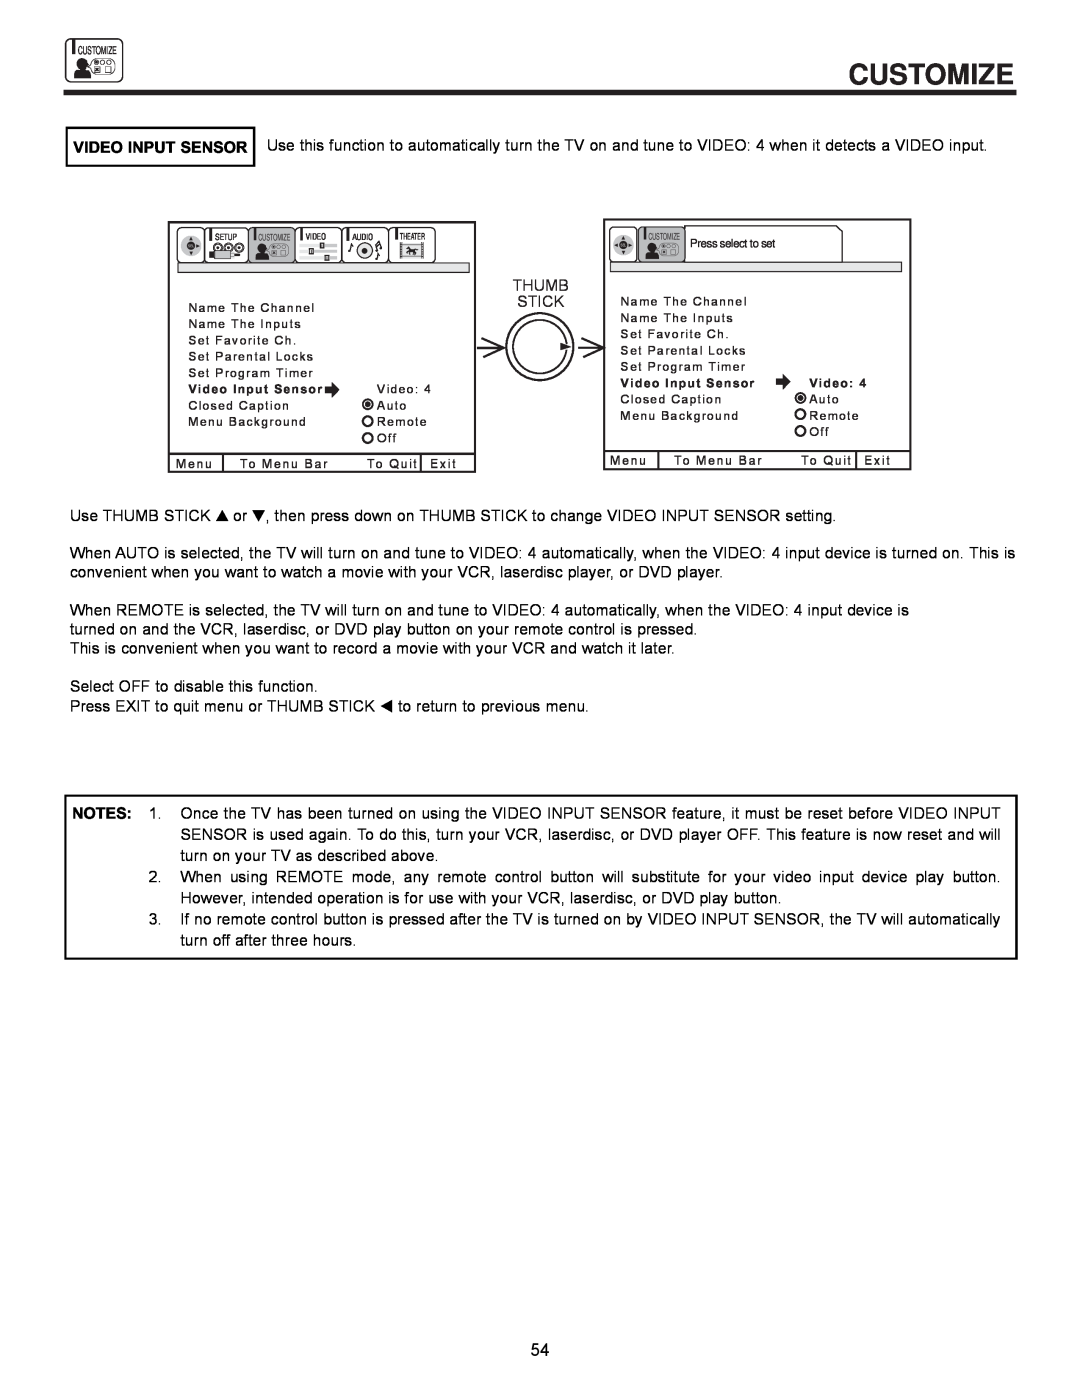 Hitachi 61UWX10B important safety instructions Customize, Video Input Sensor 